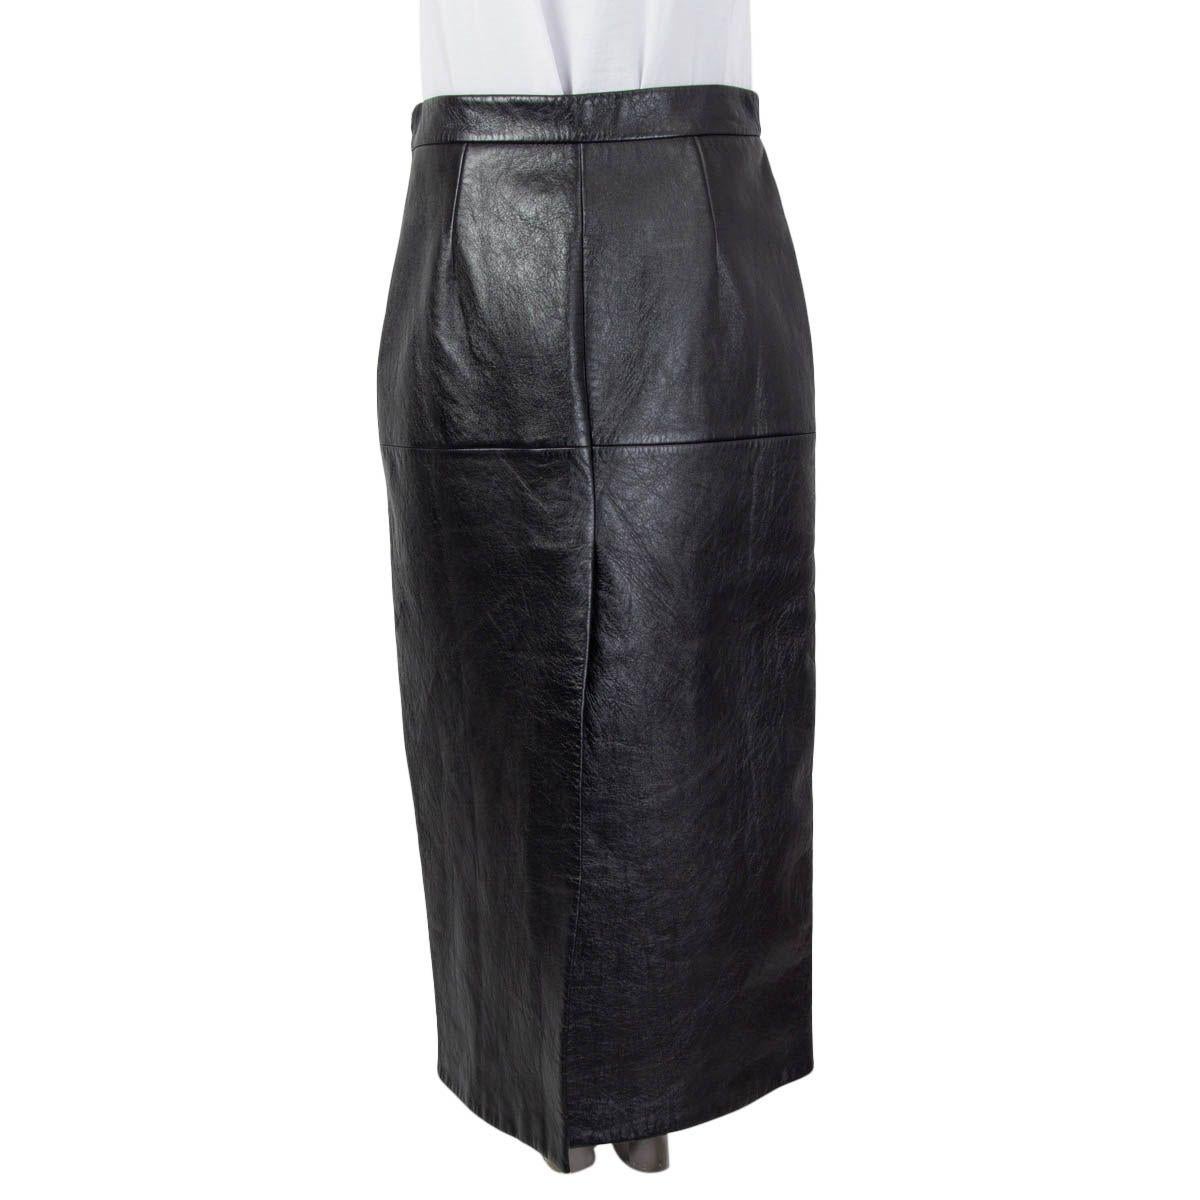 Black MIU MIU black leather 2020 PANELED HIGH RISE MIDI Skirt 44 L